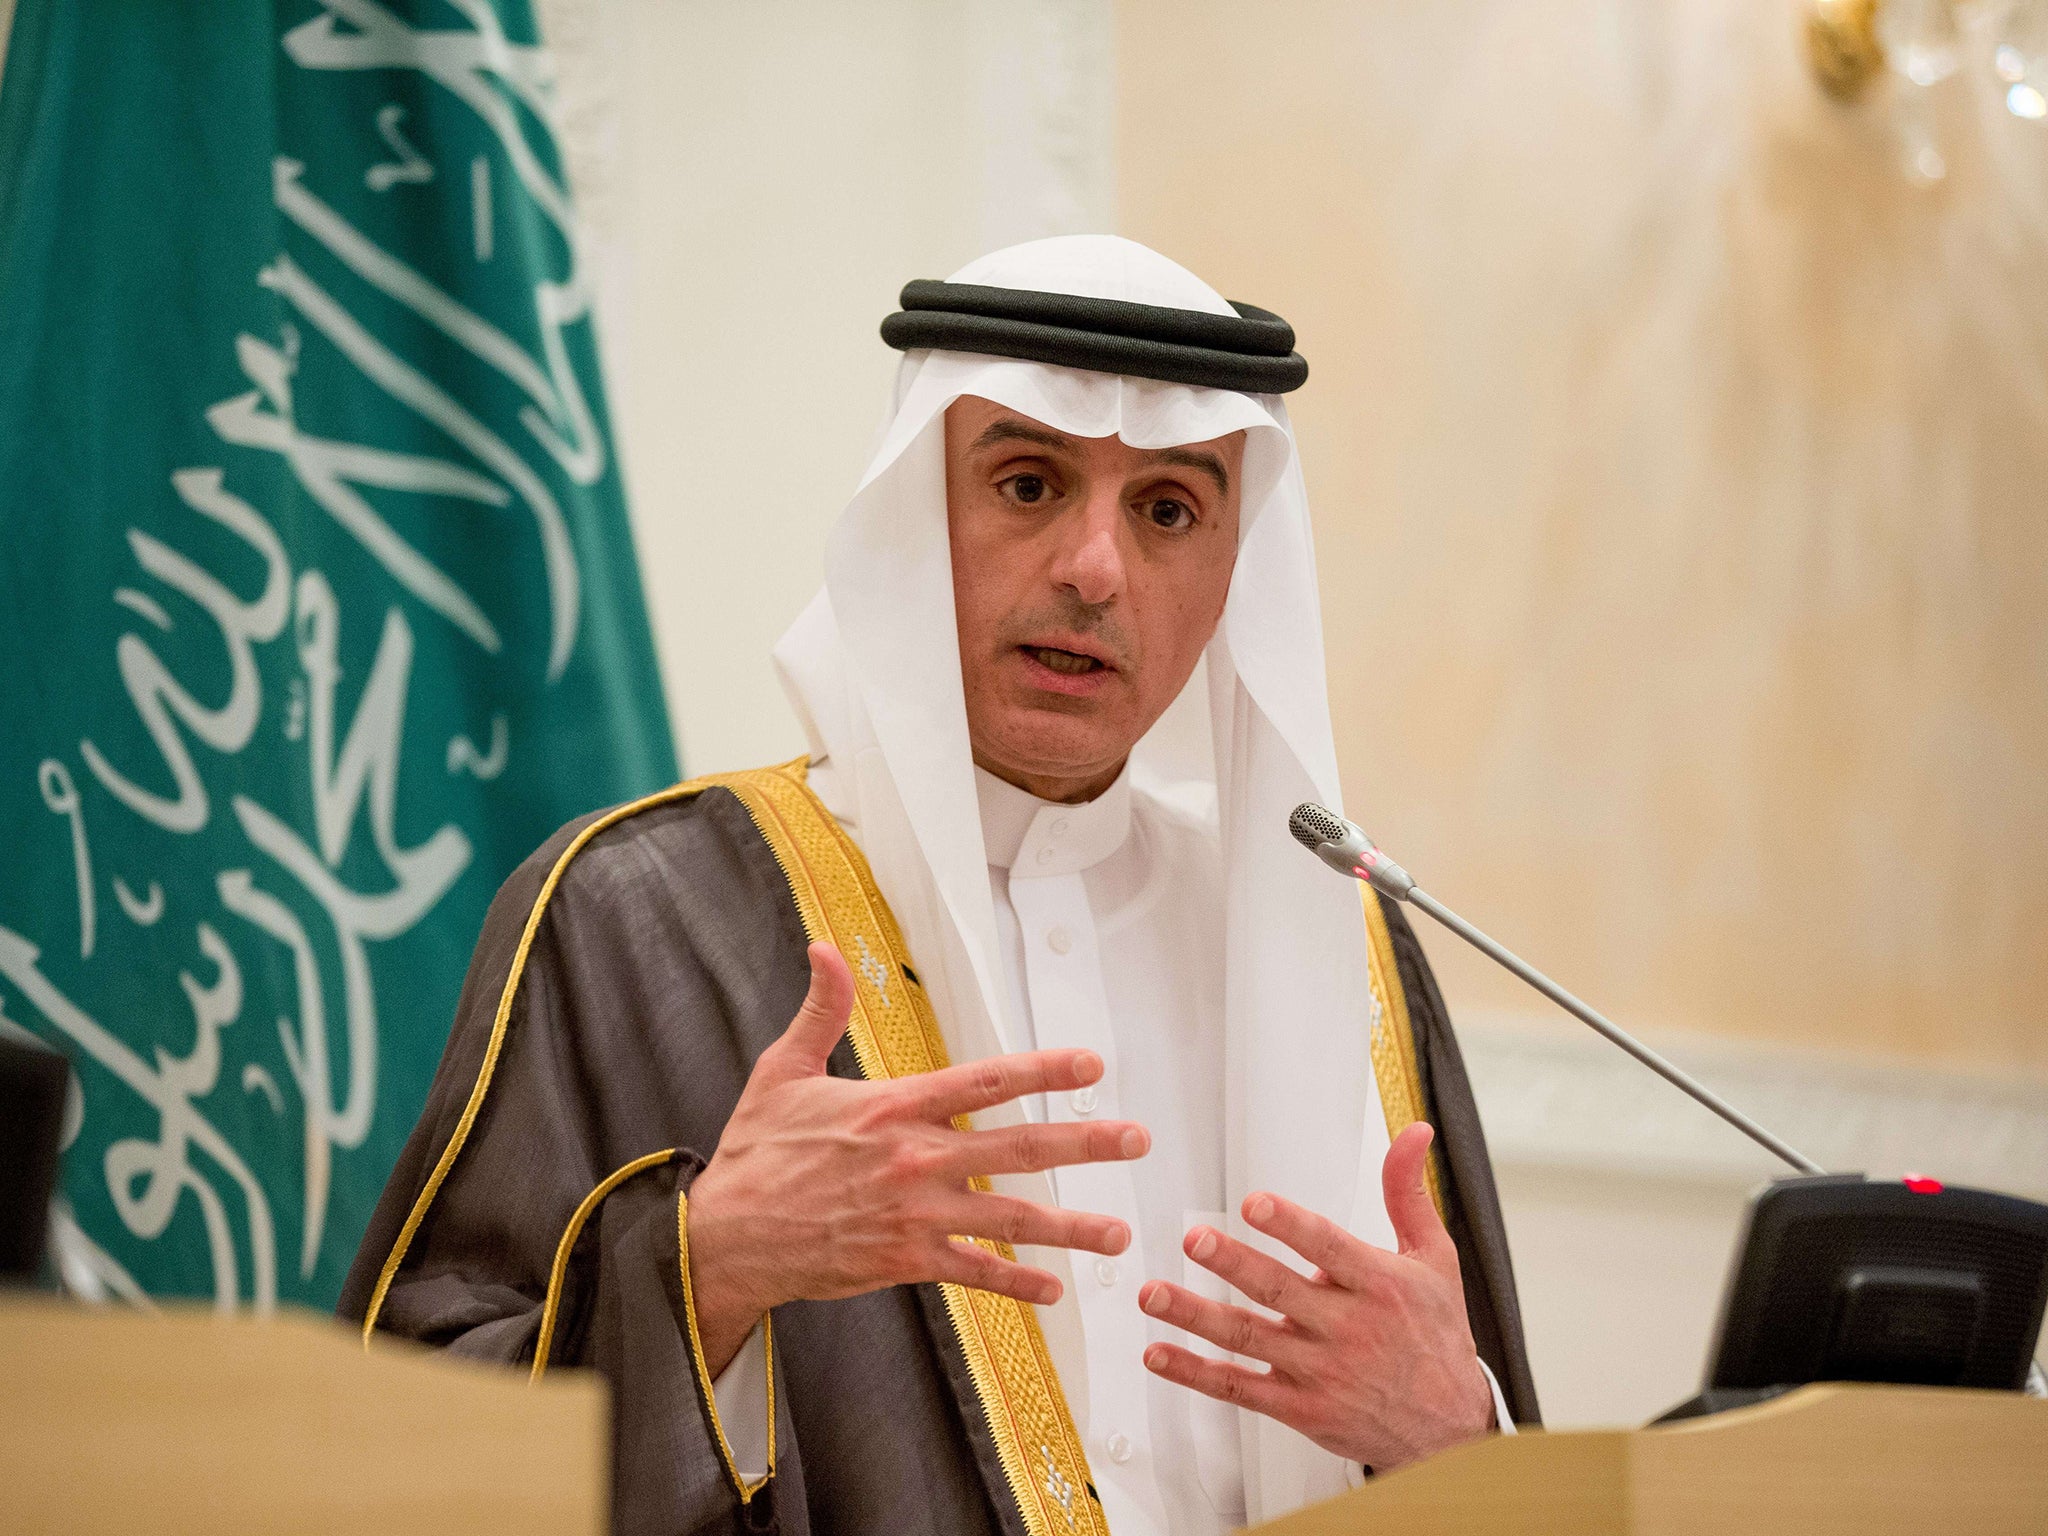 Saudi Foreign Minister Adel al-Jubeir announced the ceasefire along with John Kerry